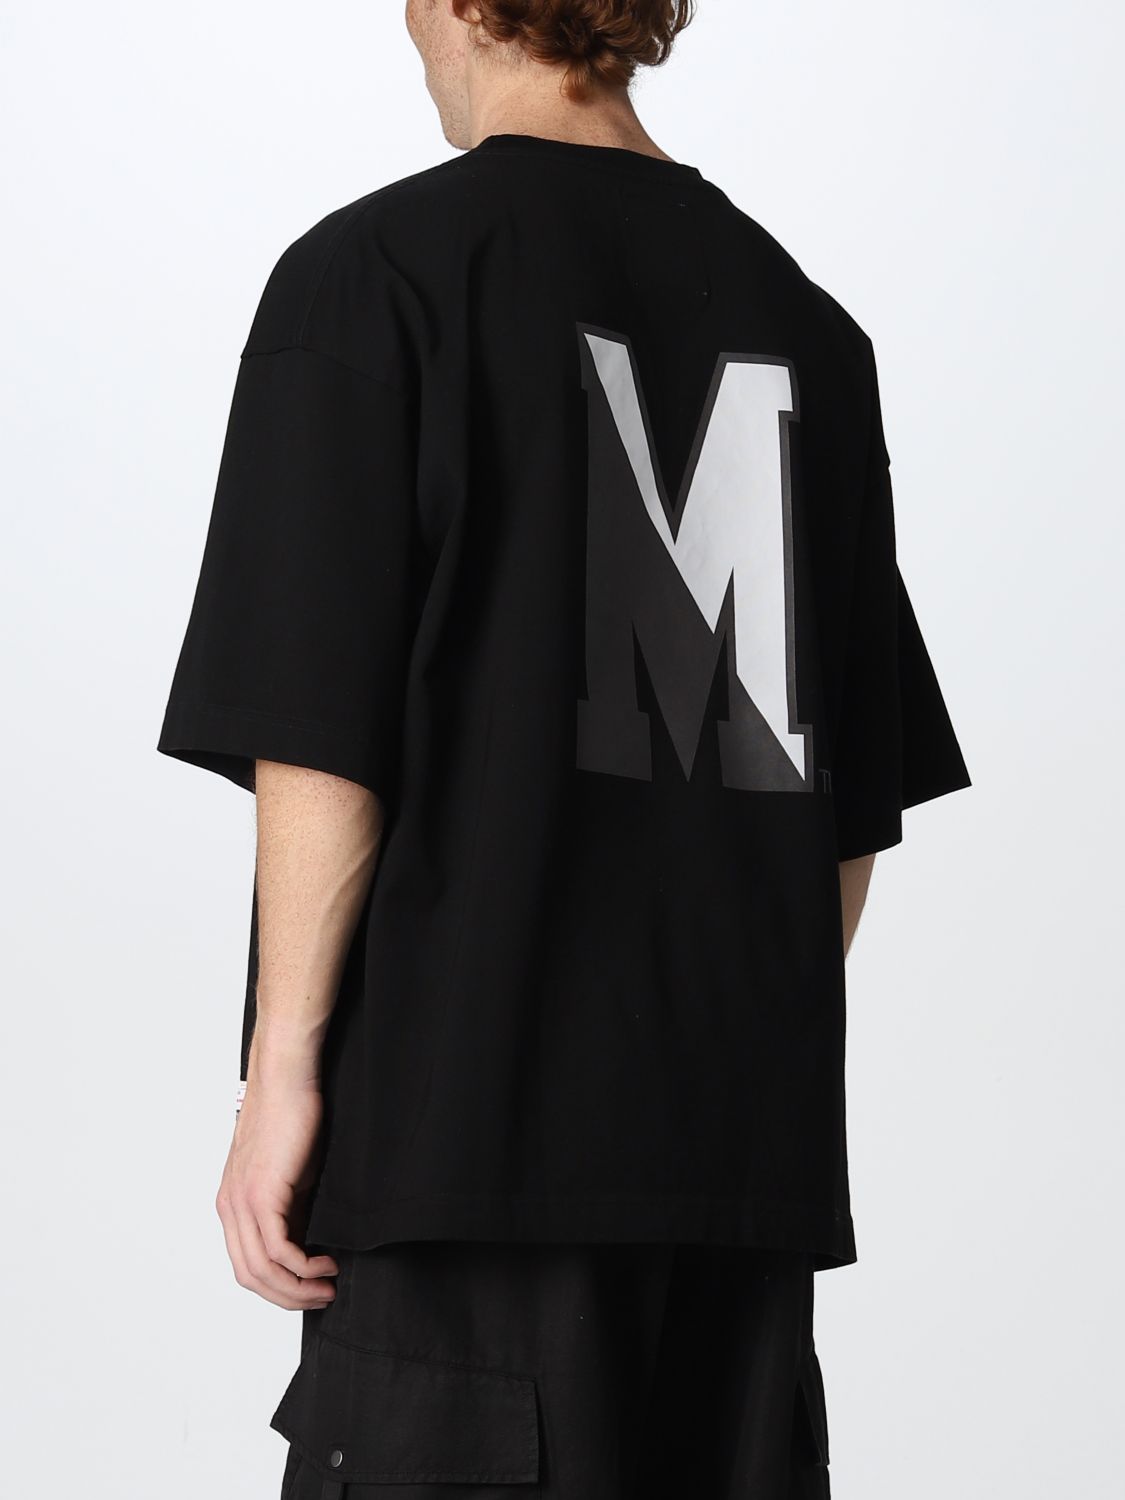 Tシャツ メゾンミハラヤスヒロ: Tシャツ メンズ Maison Mihara Yasuhiro ブラック 3